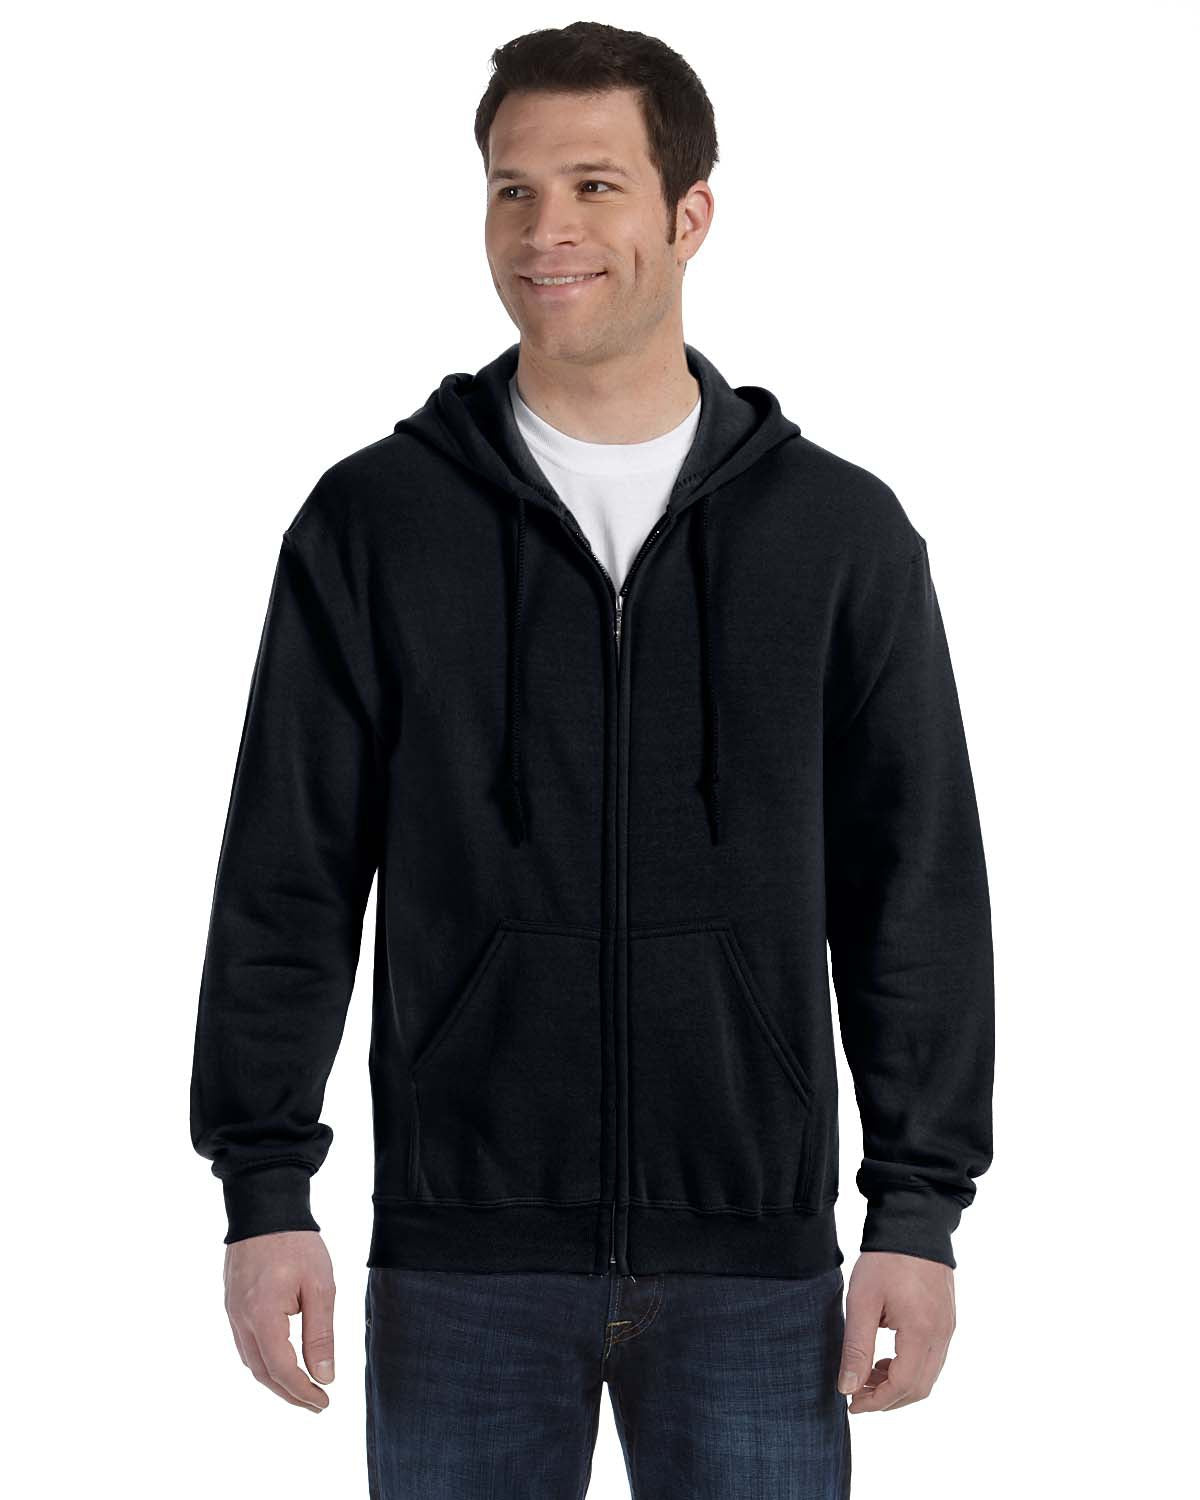 Living Testimony - Unisex Full Zip Basic Hooded Sweatshirt G186